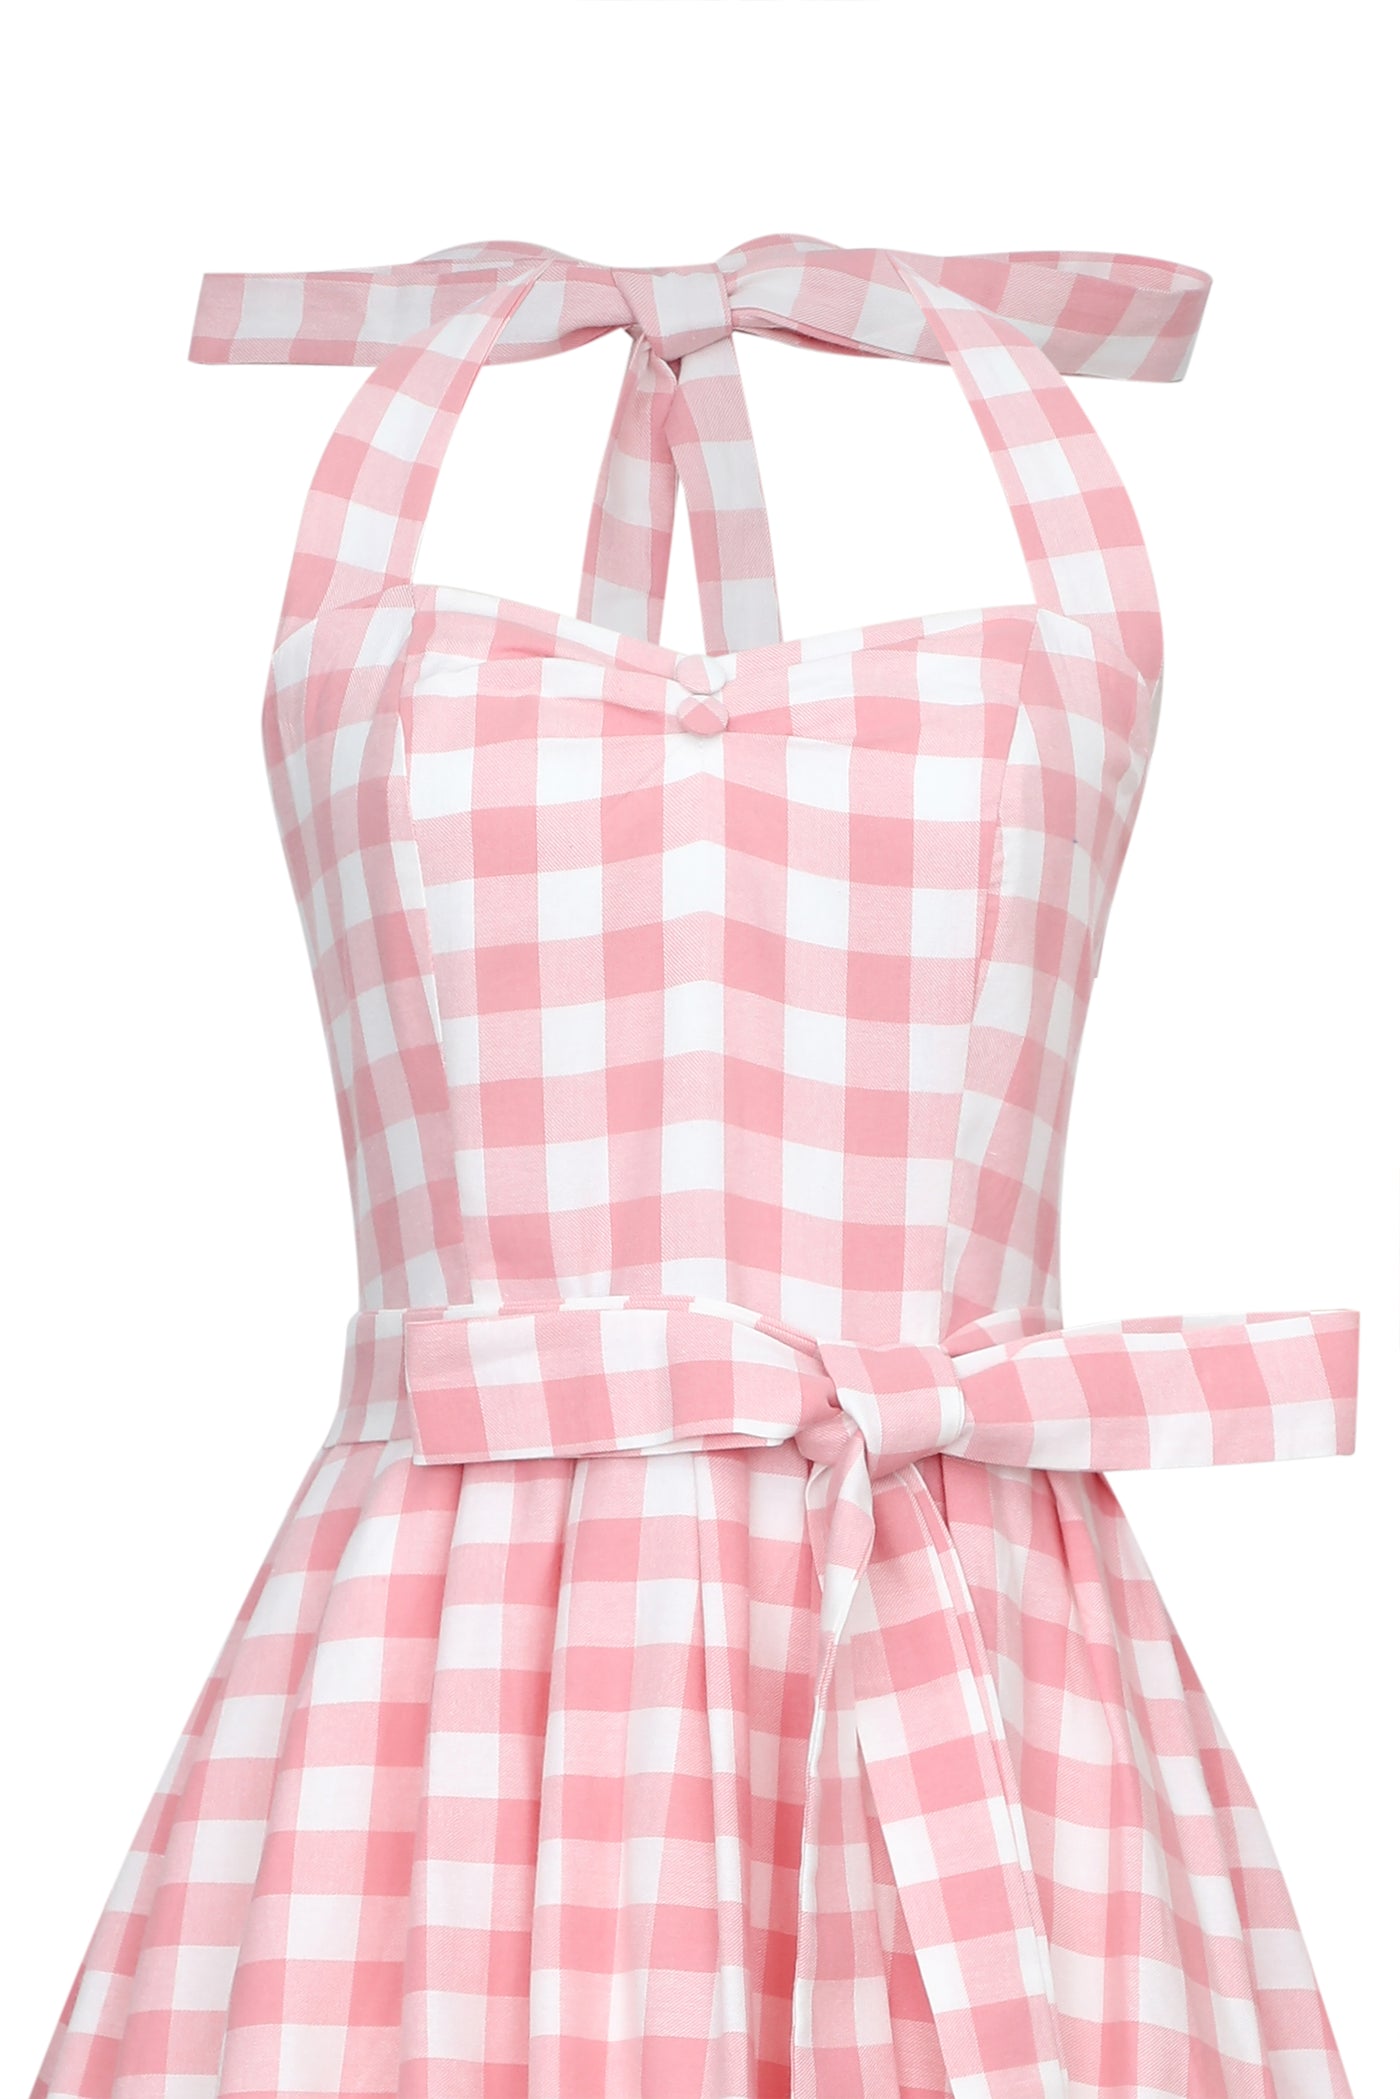 Pink Gingham Swing Dress